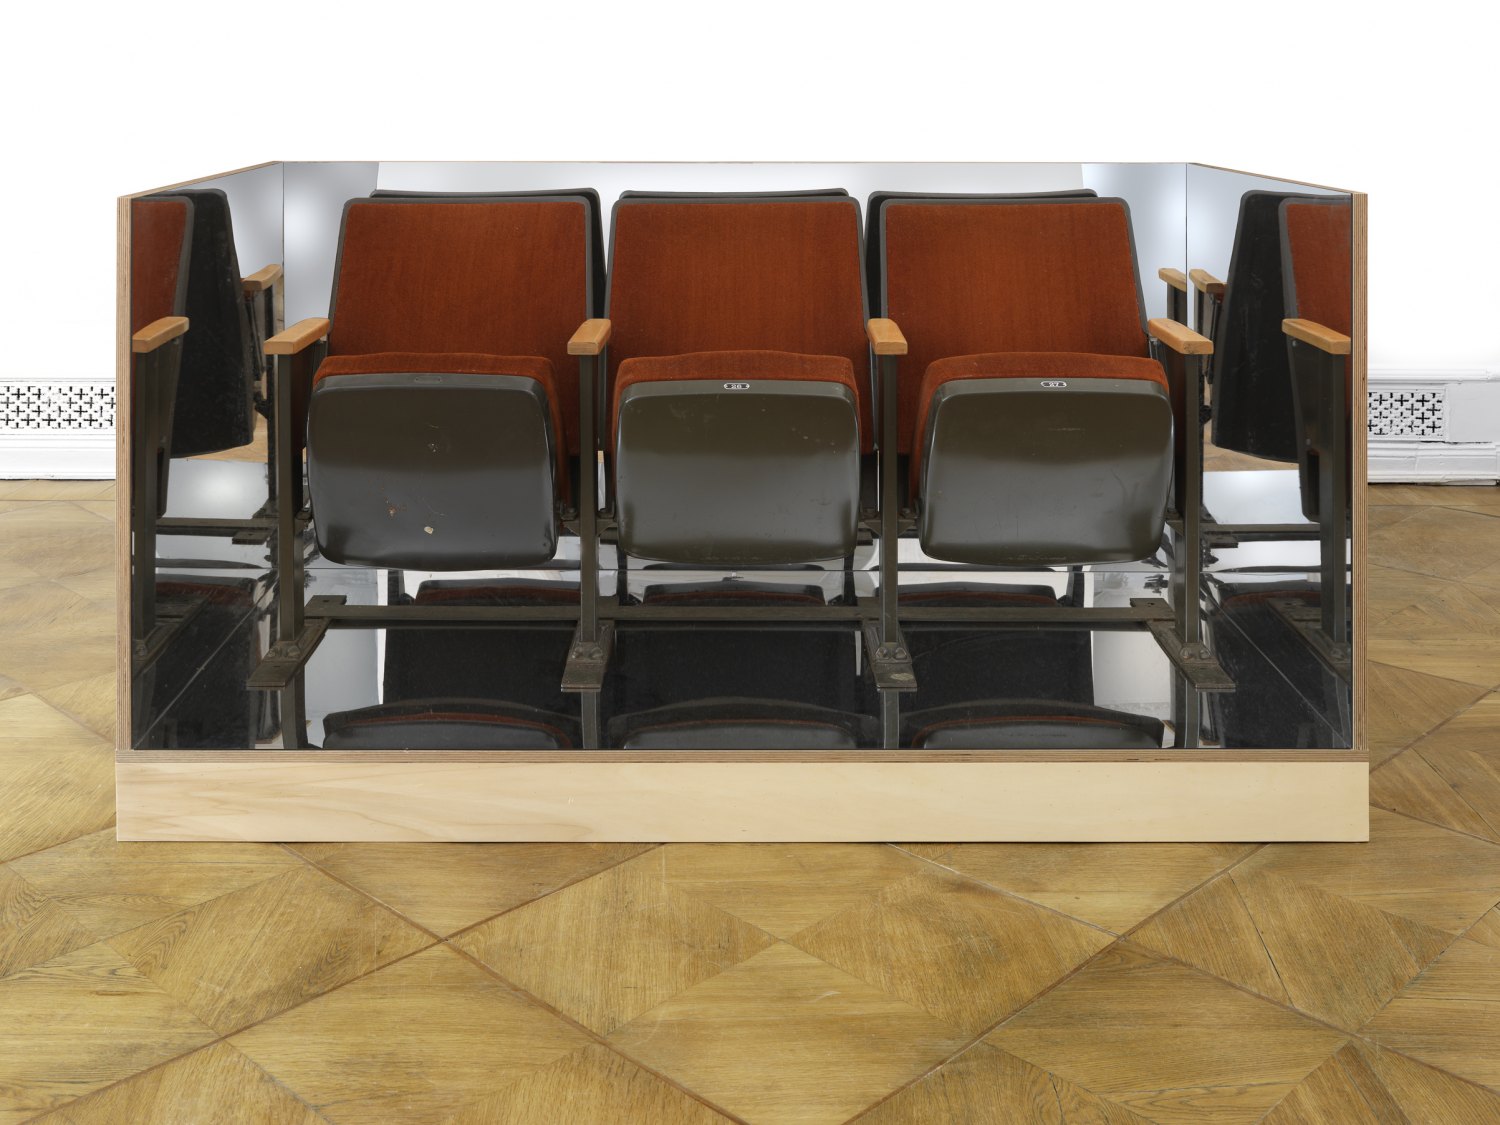 Tom Burr Three Seats in a Box, 2010 Plywood, mirrored plexiglas, carpet, movie theater seats, 107 × 183 × 91.5 cm 